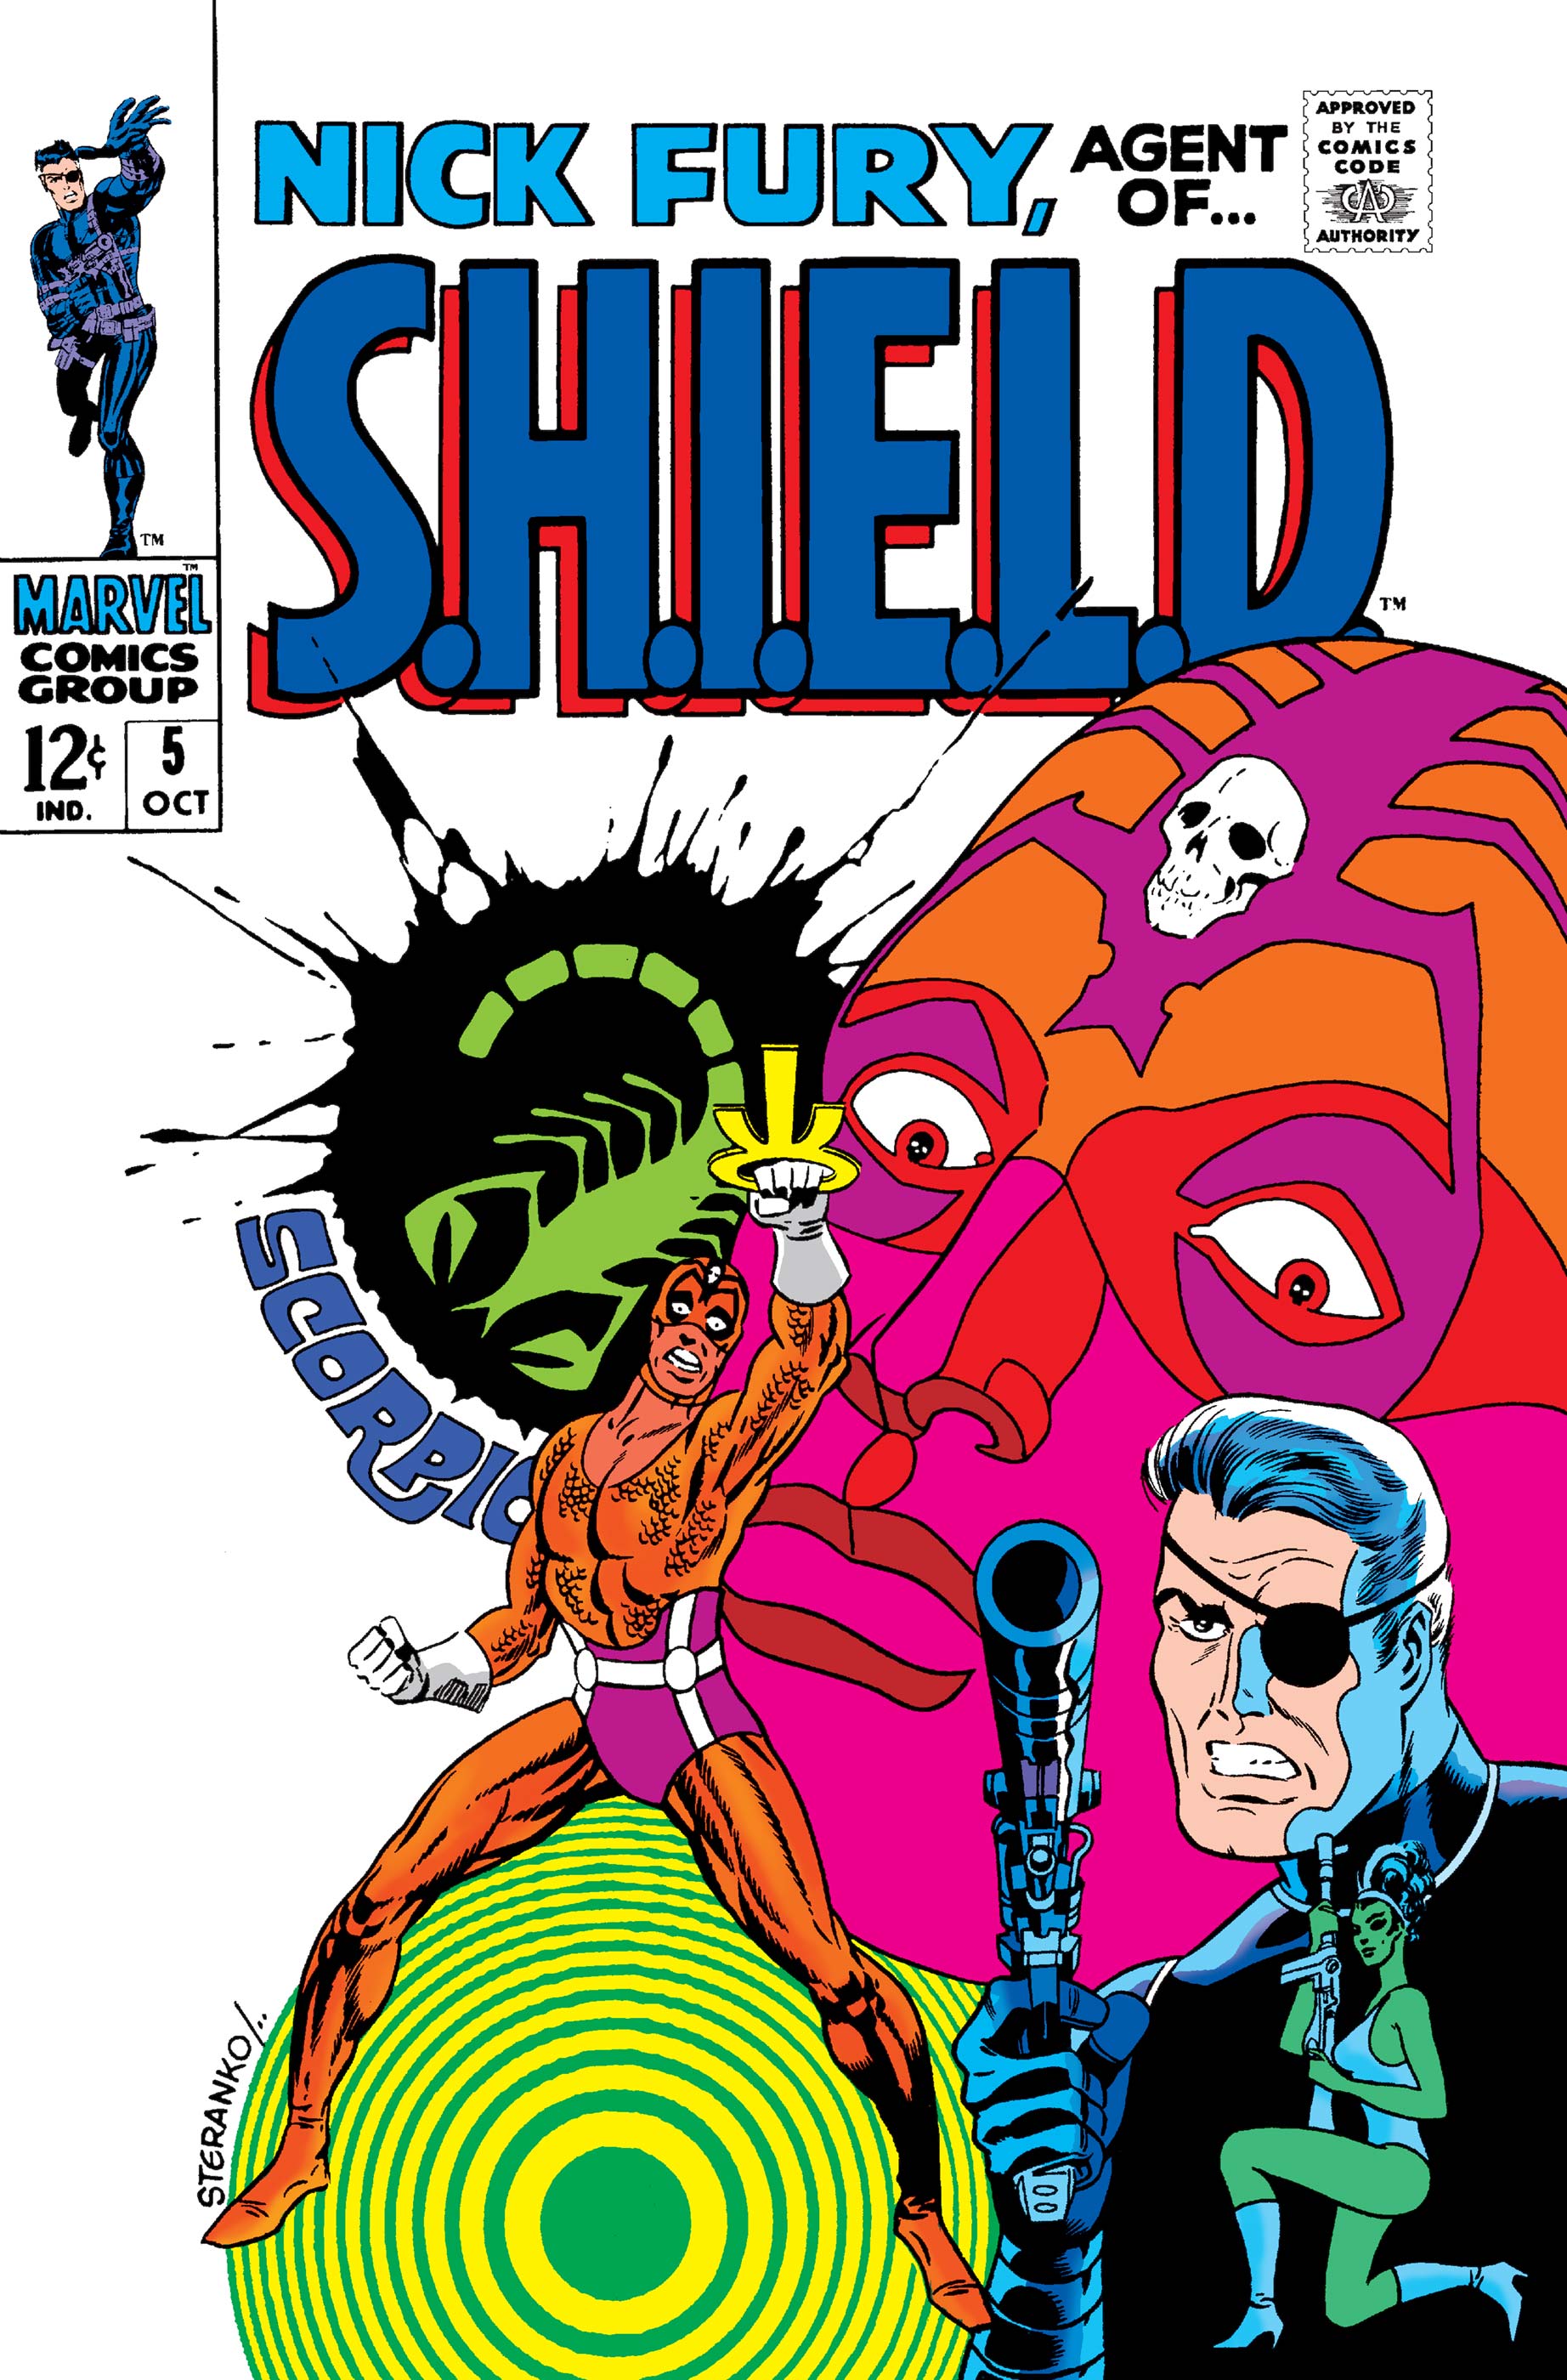 Nick Fury, Agent of S.H.I.E.L.D. (1968) #5